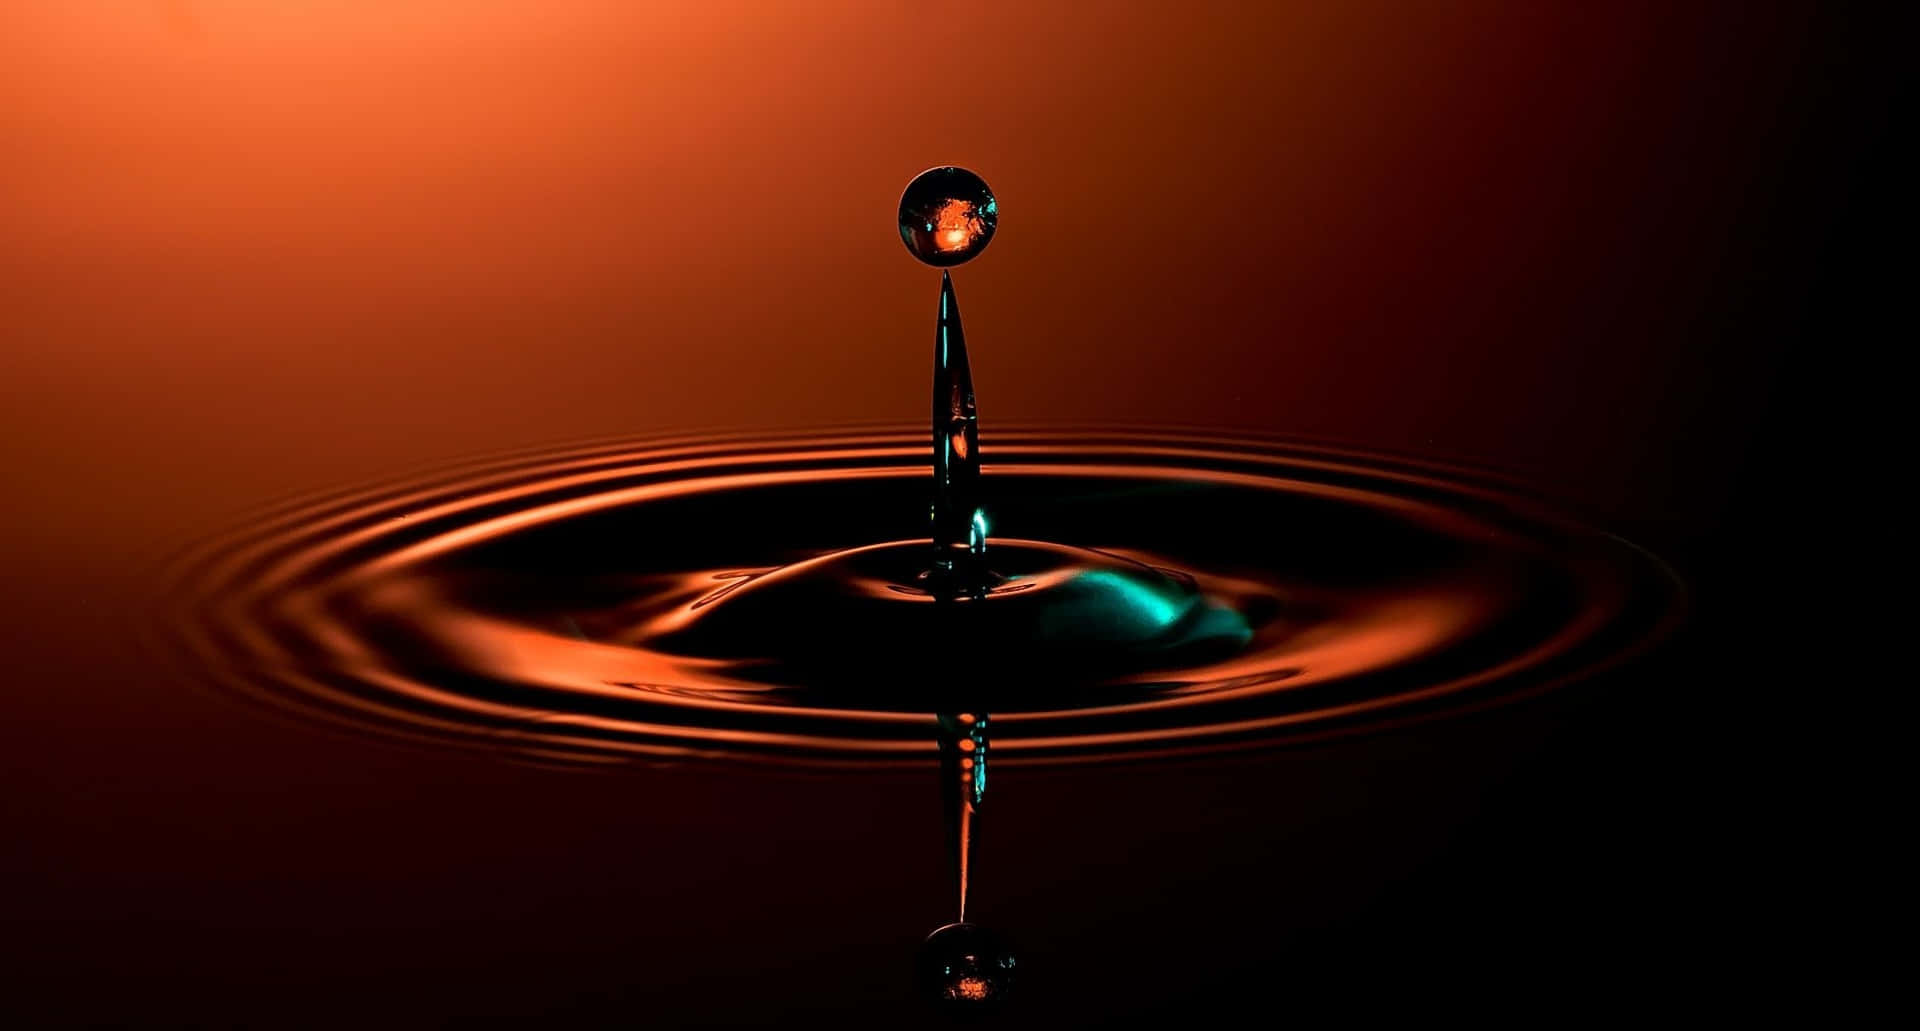 “Drip, drop, into a world of pure refreshment.”